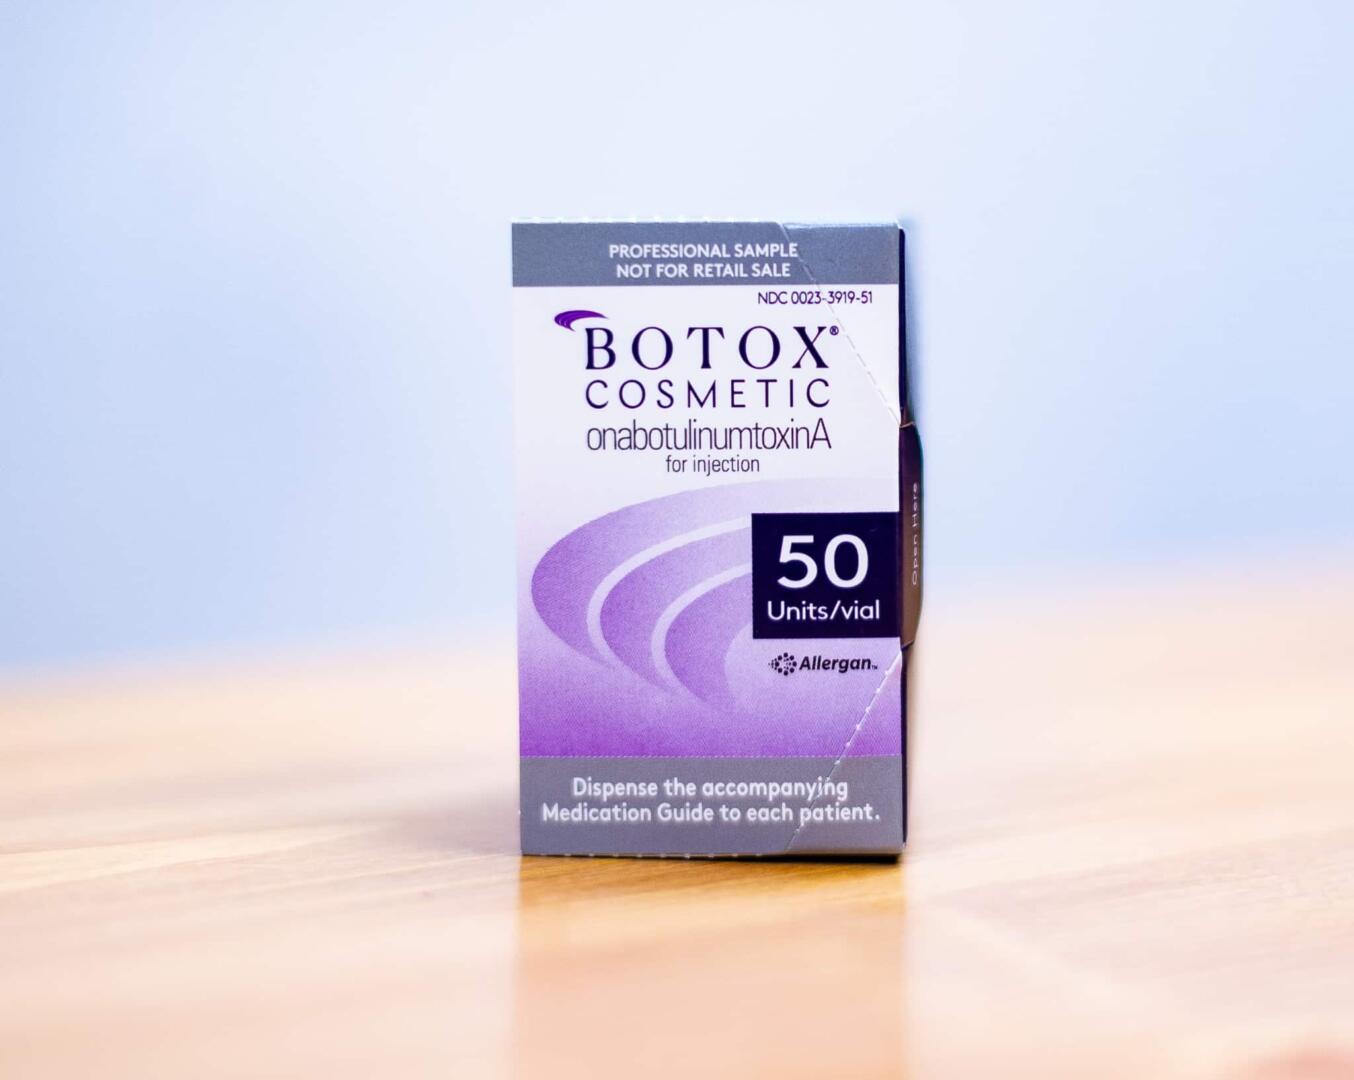 Our Botox Services